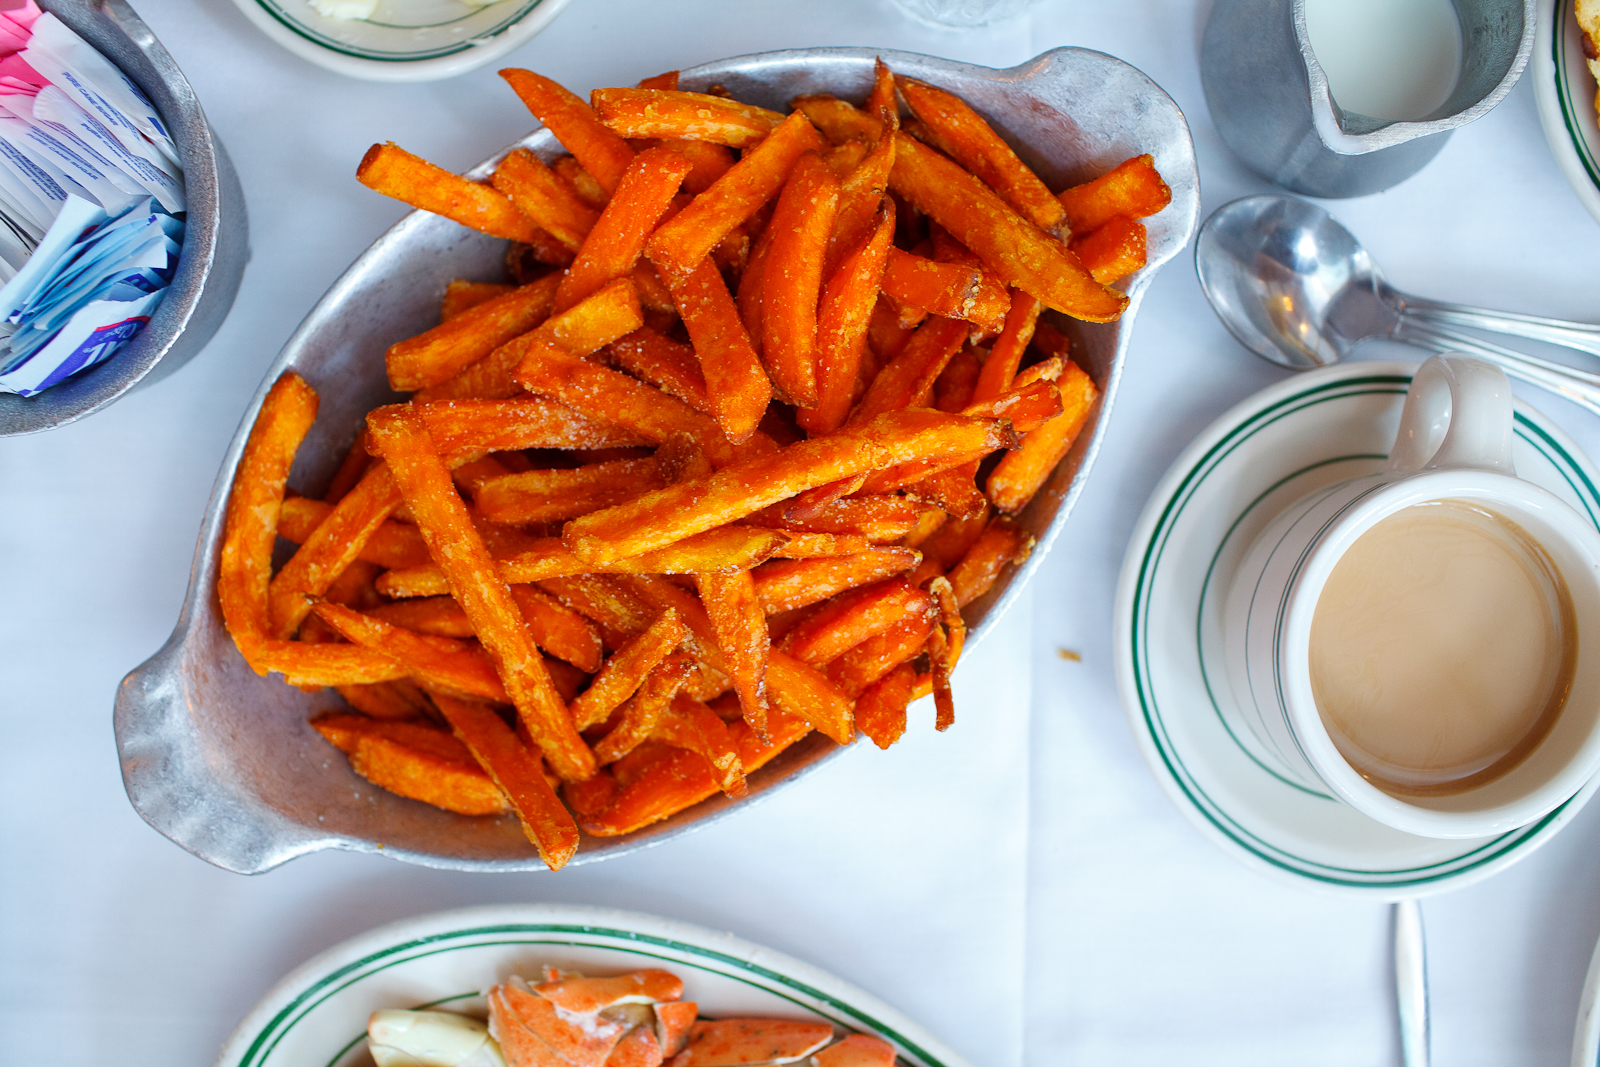 Skinny fried sweet potatoes ($6.95)